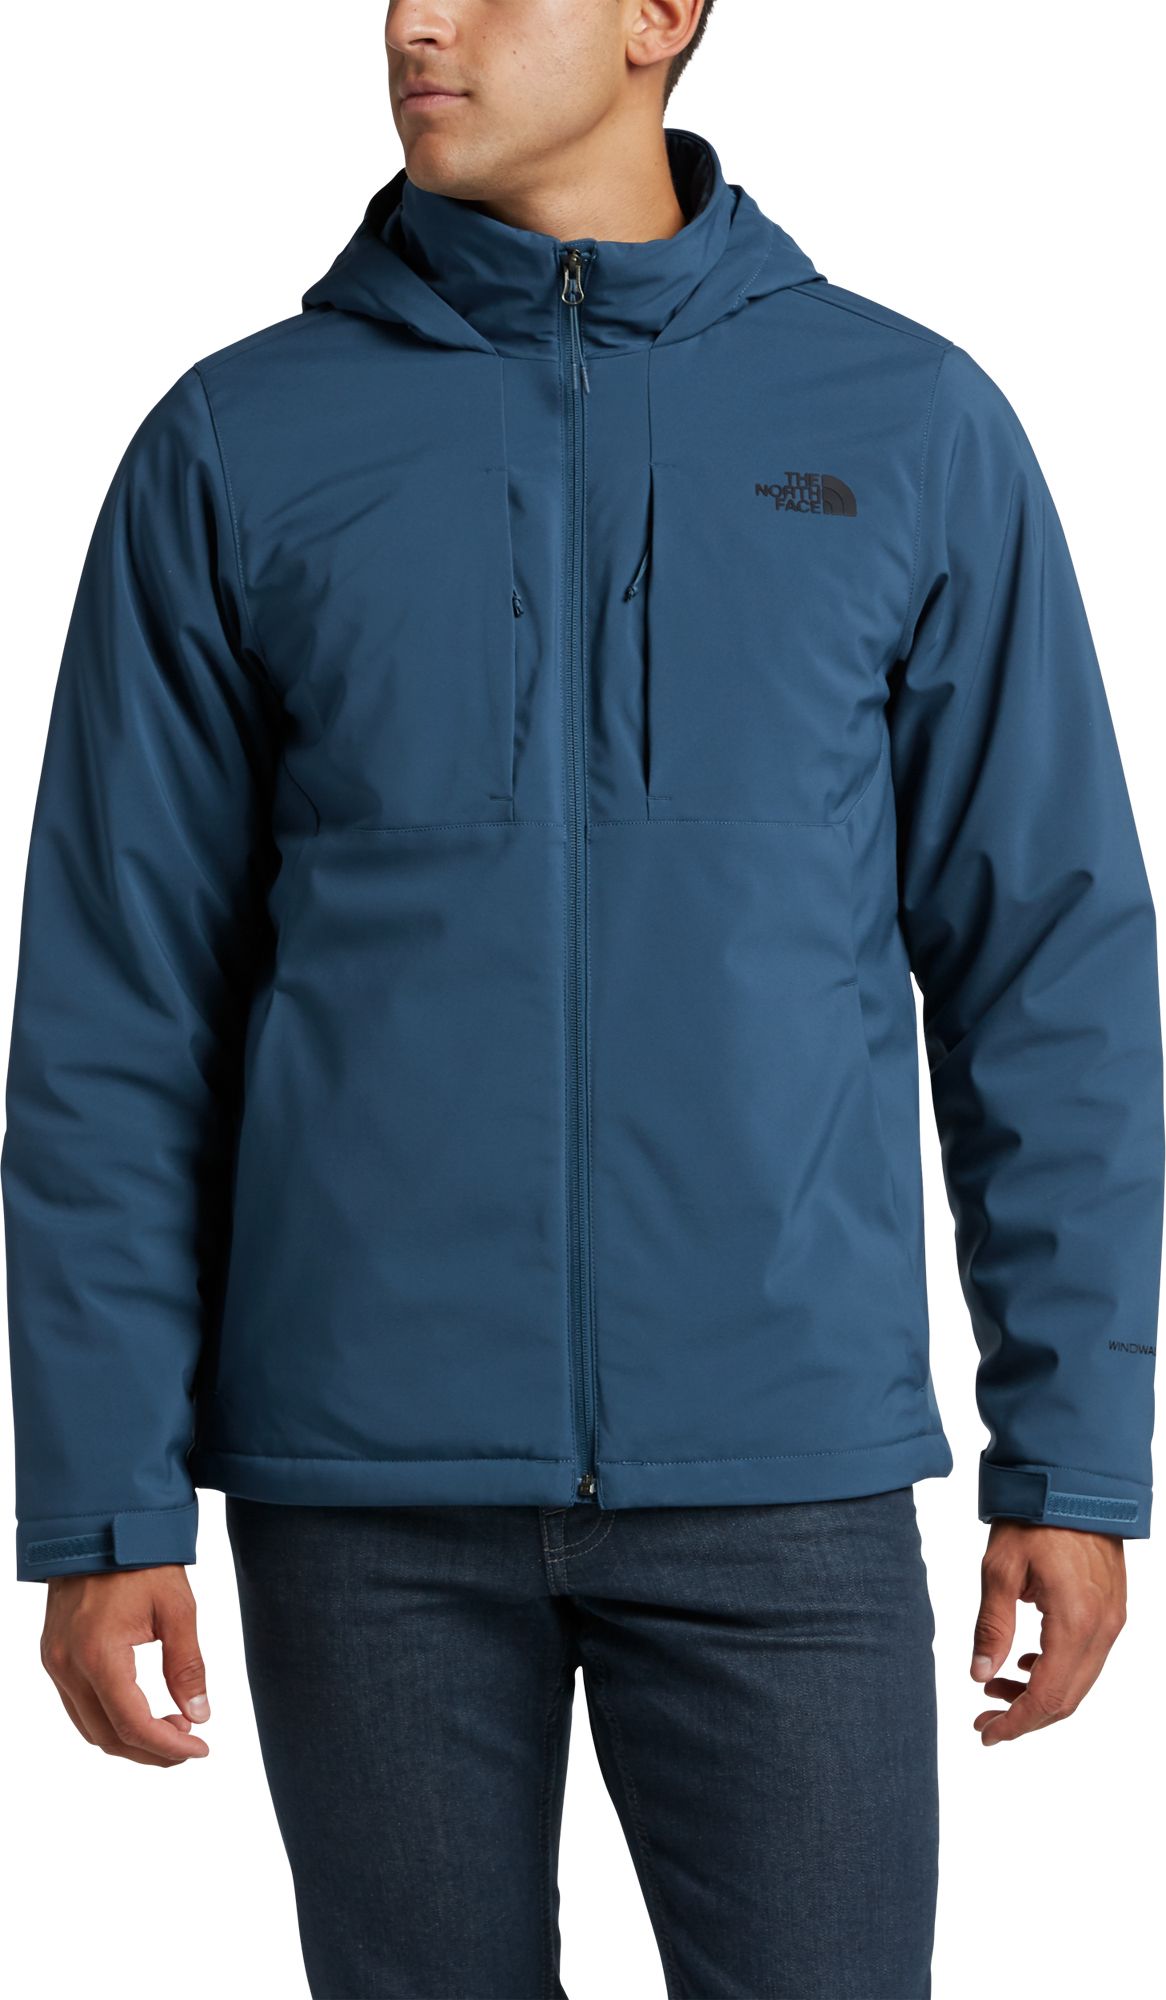 men's apex elevation jacket